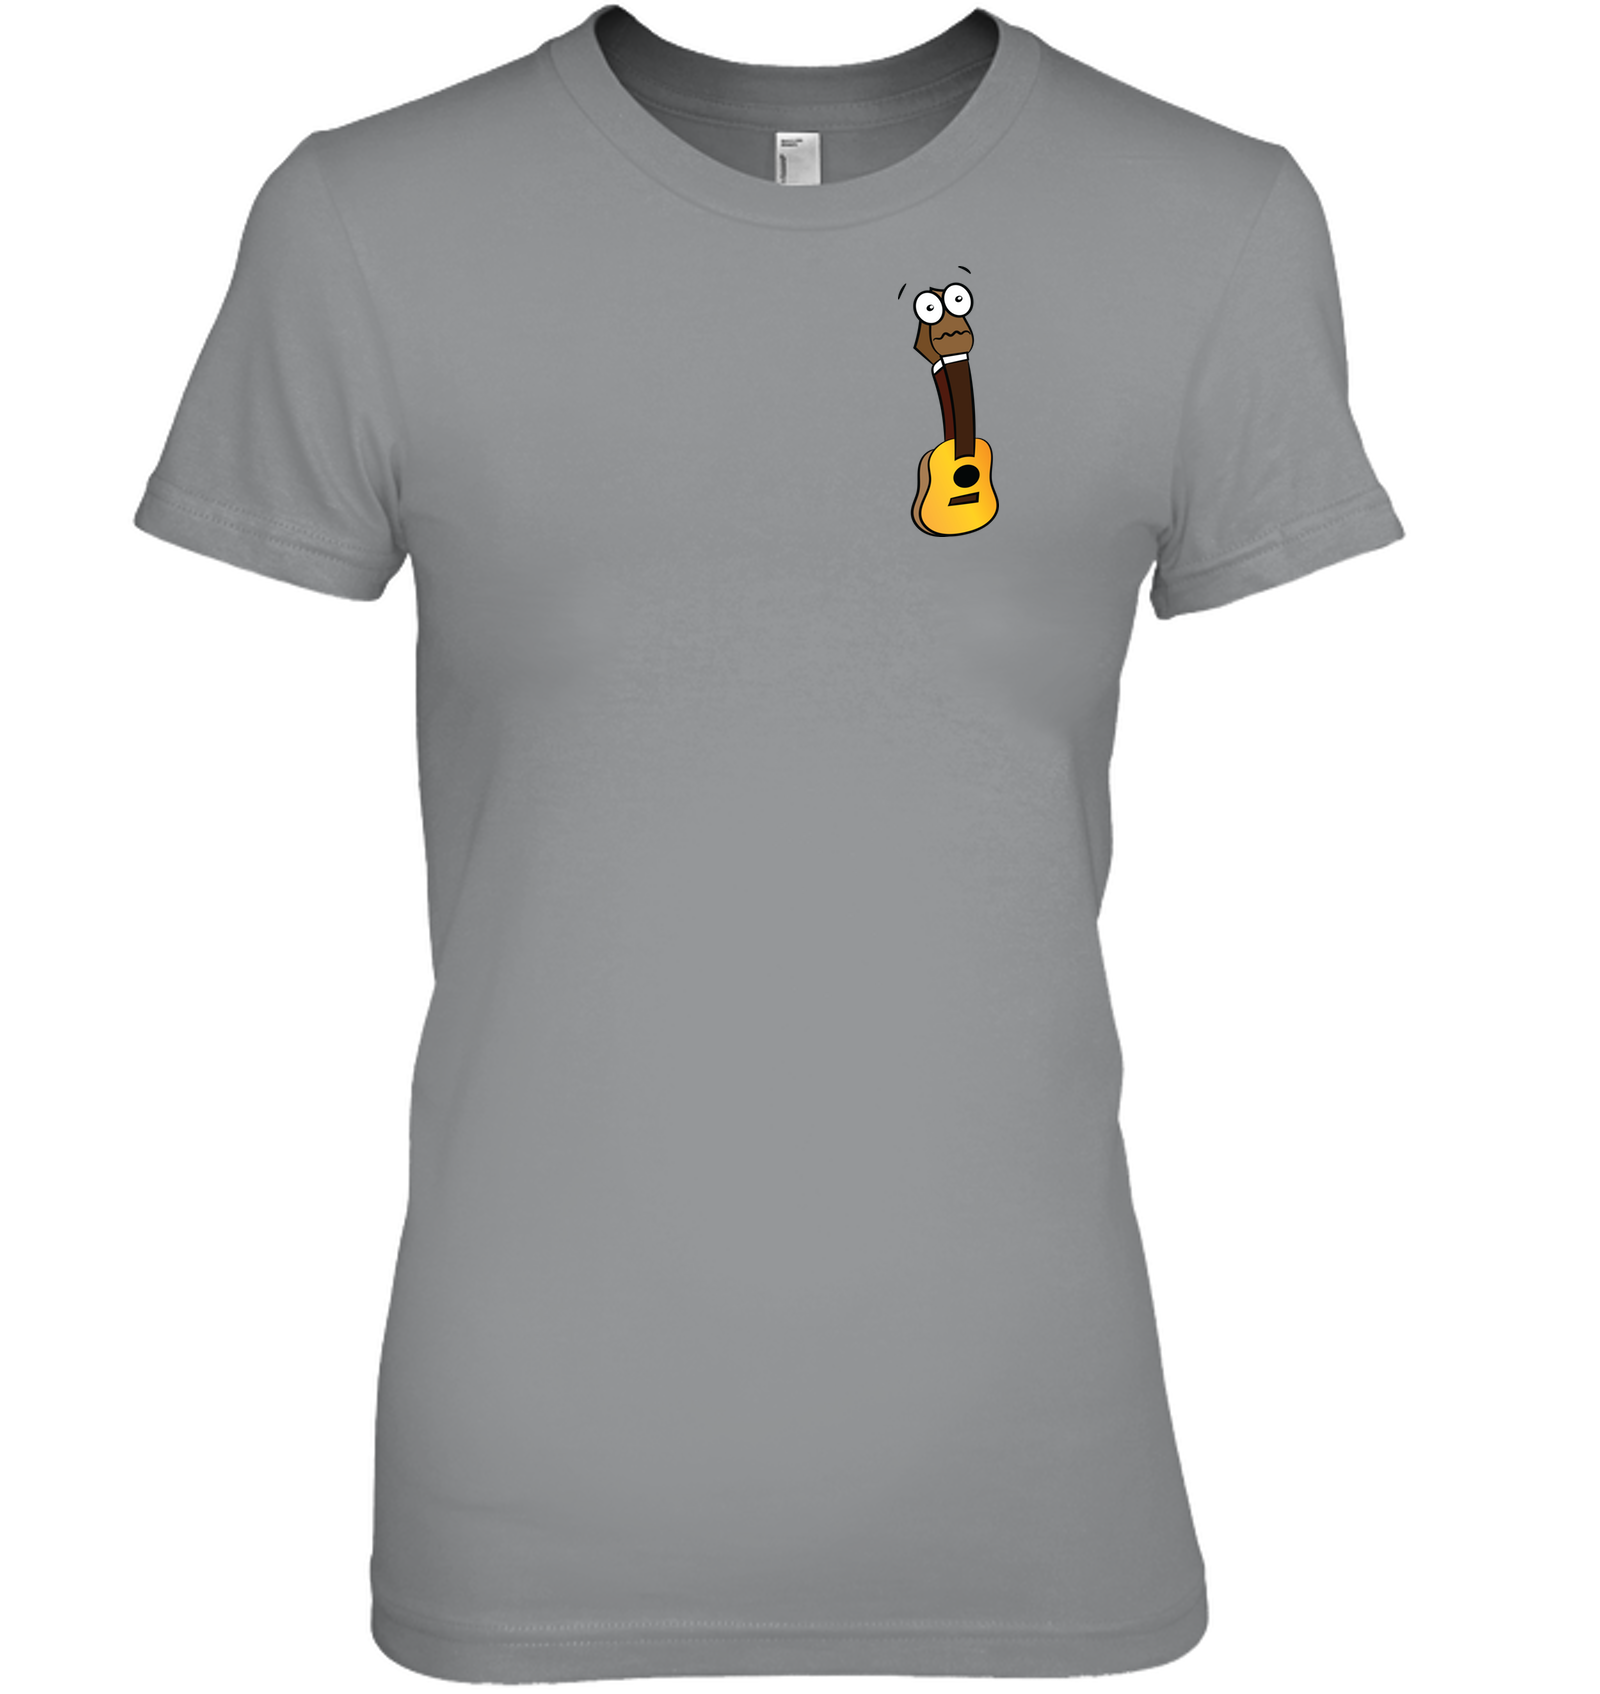 Silenced Guitar (Pocket Size) - Hanes Women's Nano-T® T-Shirt